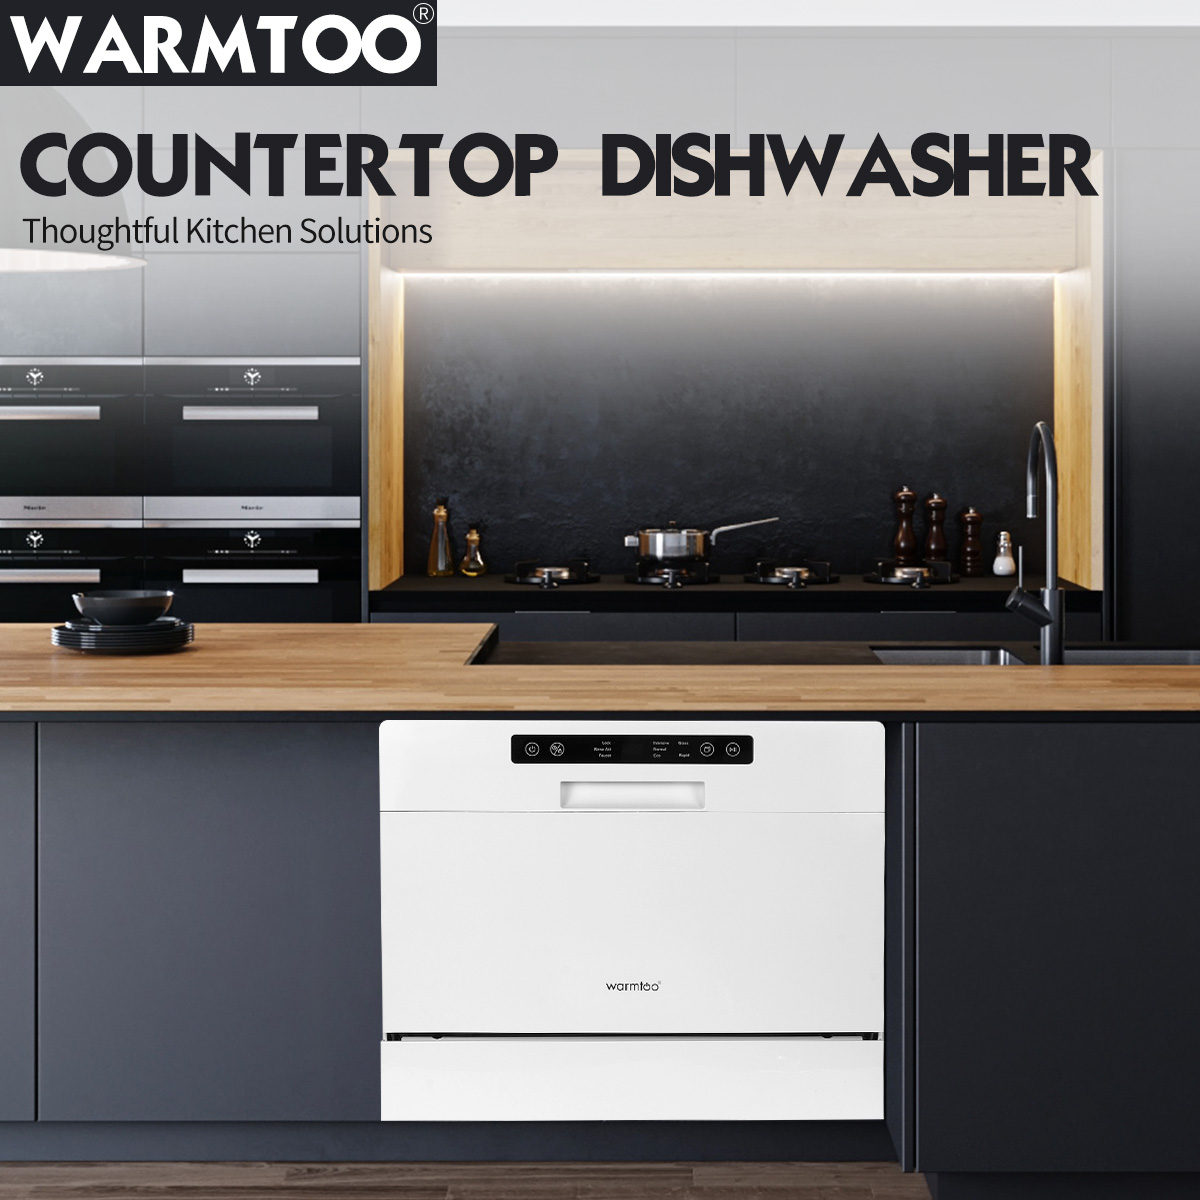 Warmto-6-Piece-Countertop-Dishwasher-Counter-Top-Dishwasher-Machine-Delay-Start-LED-Display-5-Washin-1931541-2